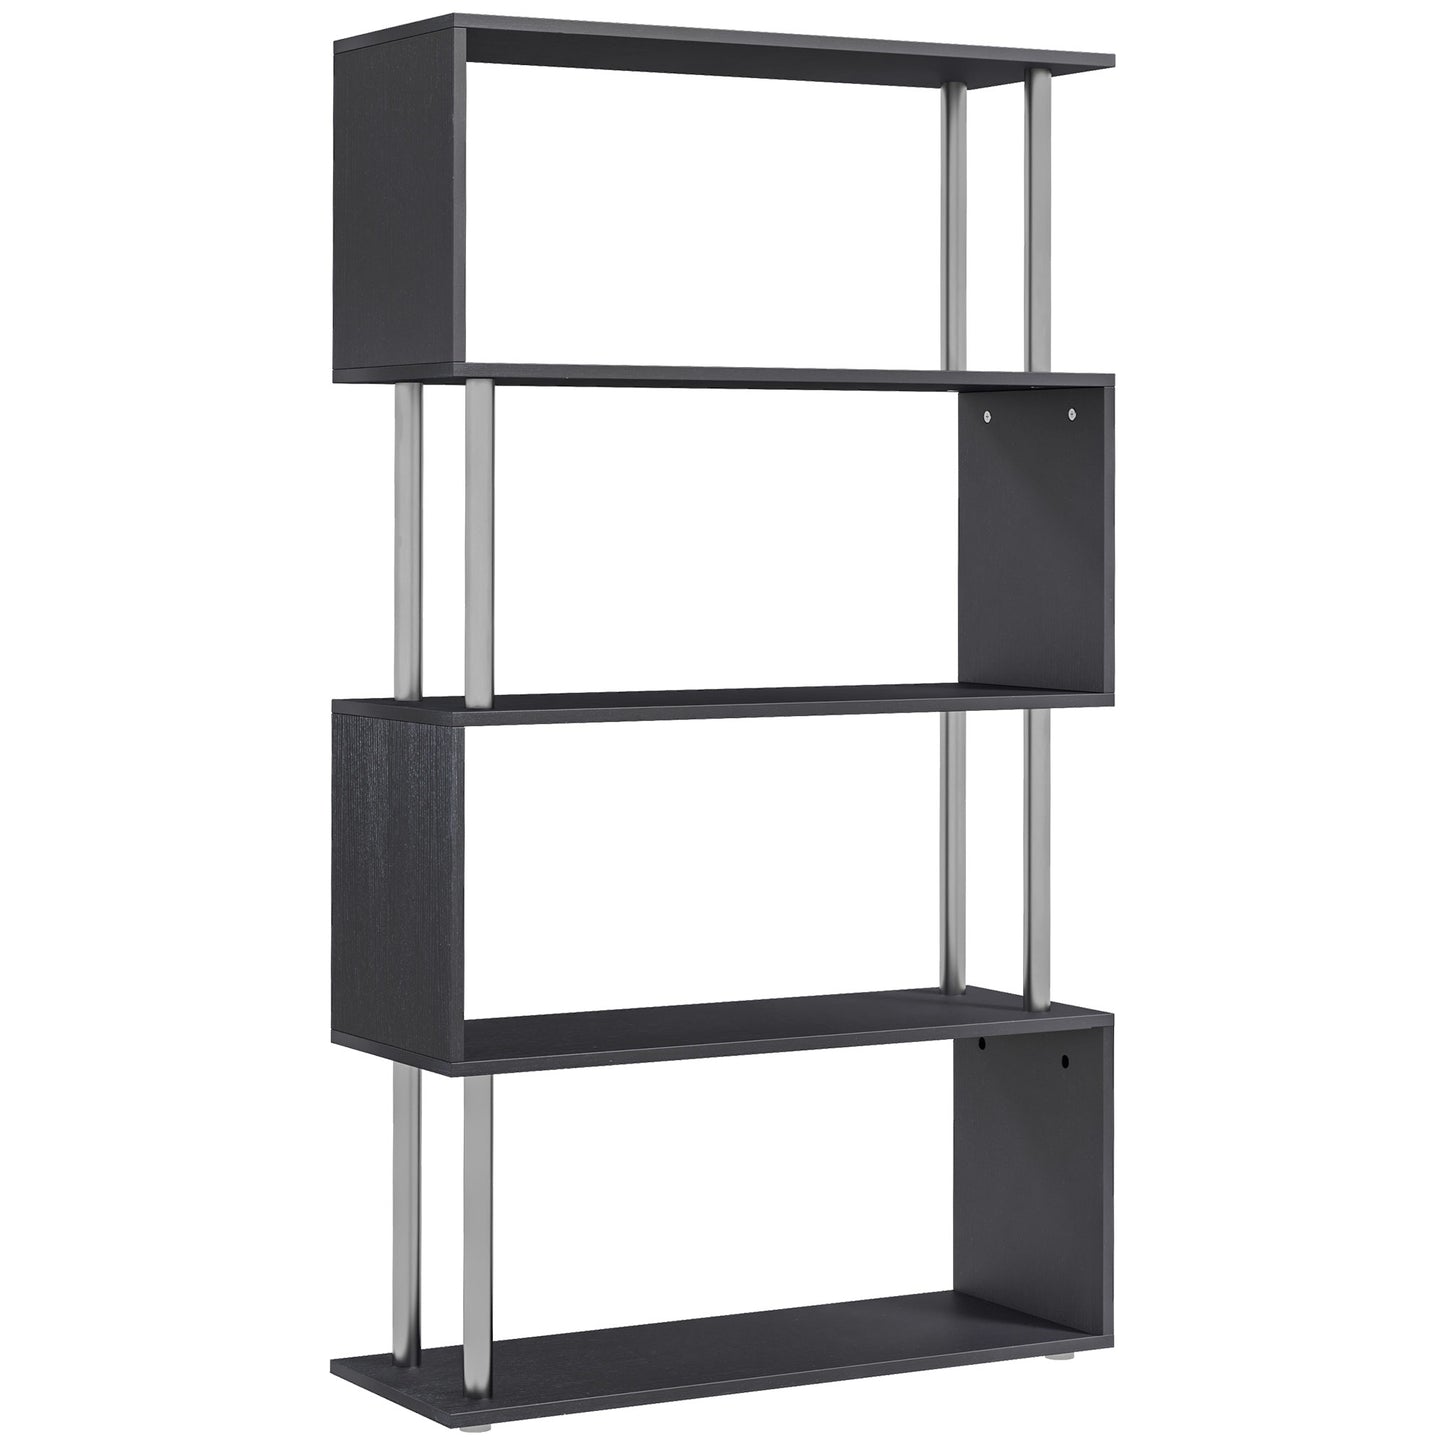 S-Shaped Bookcase, Contemporary Wooden Bookshelf Dividers, Spacious Storage Display Unit, Black, HOMCOM, 1